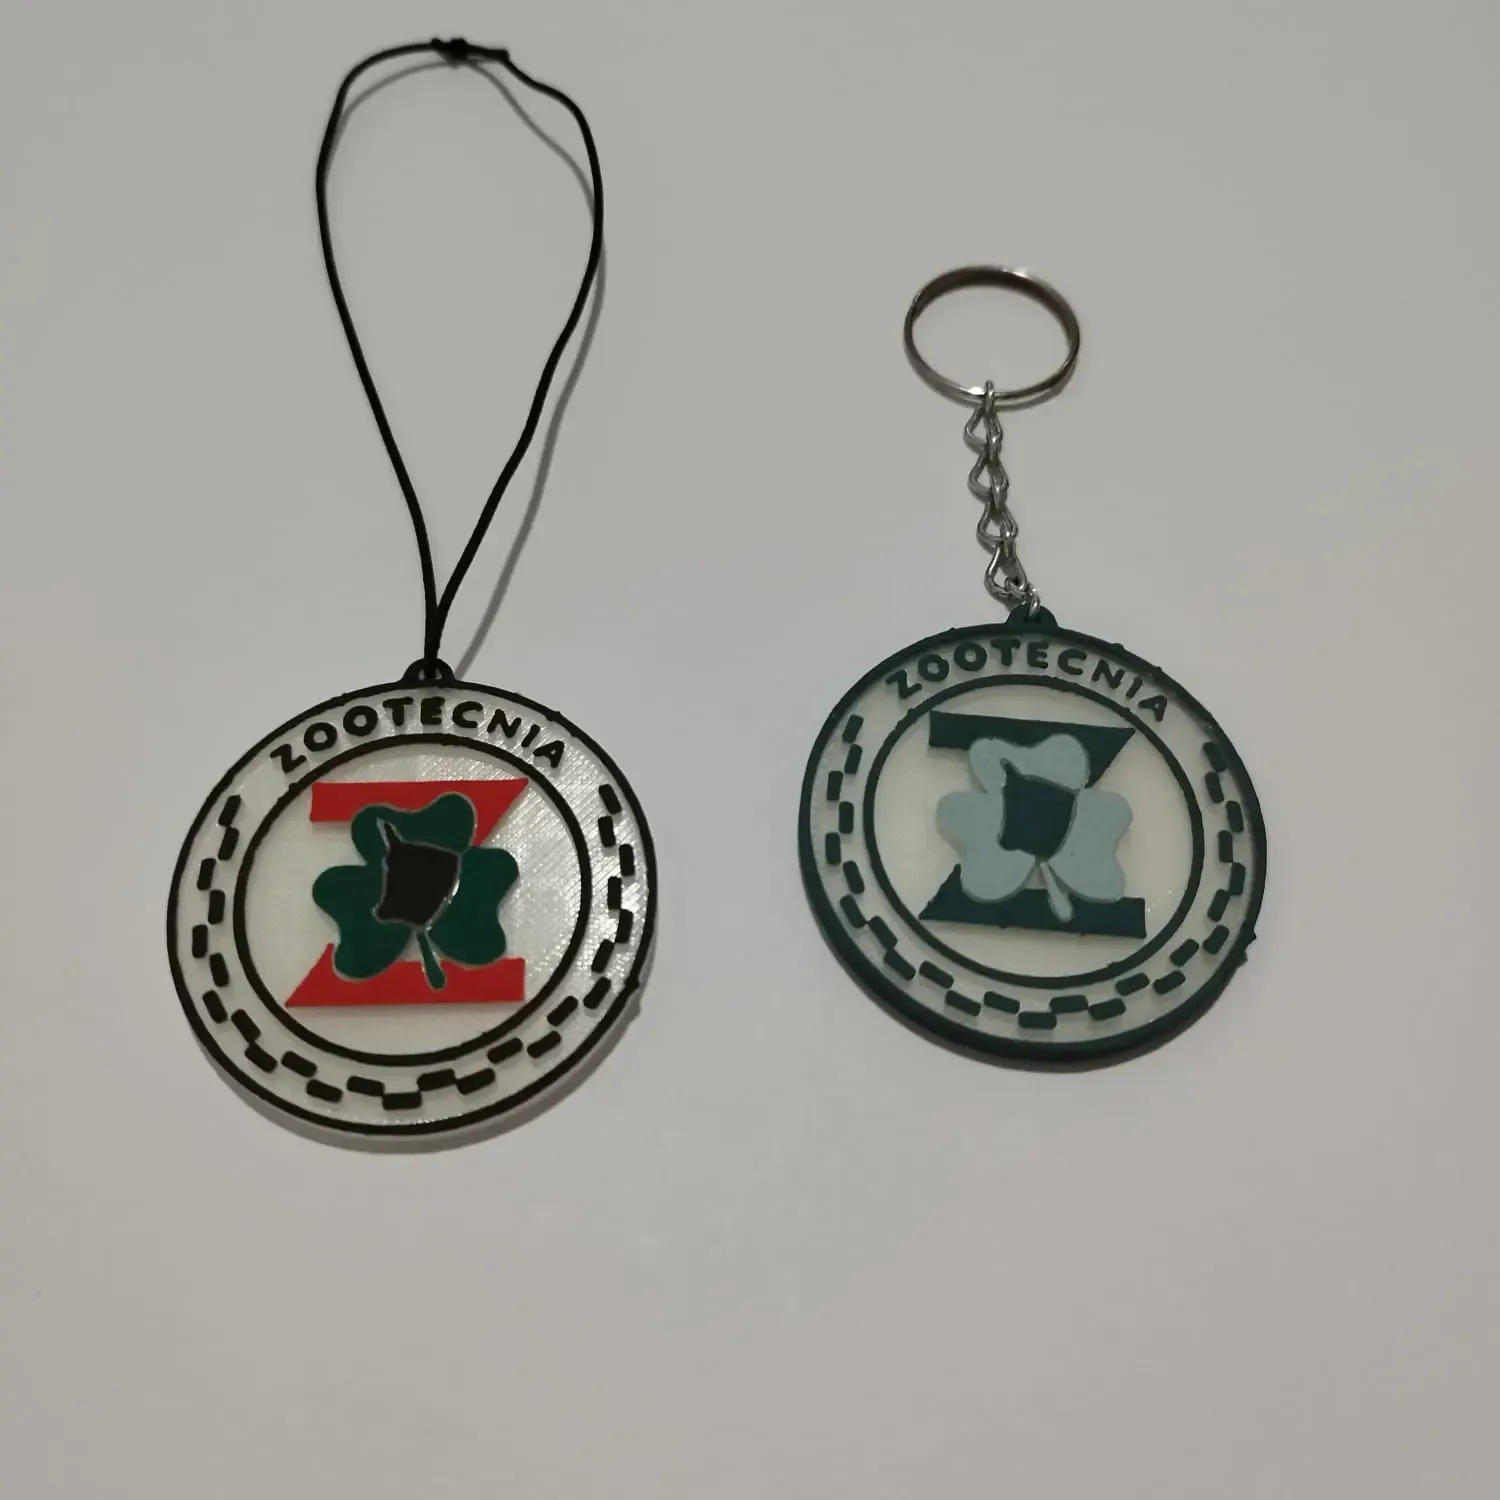 Medalhão Zootecnia